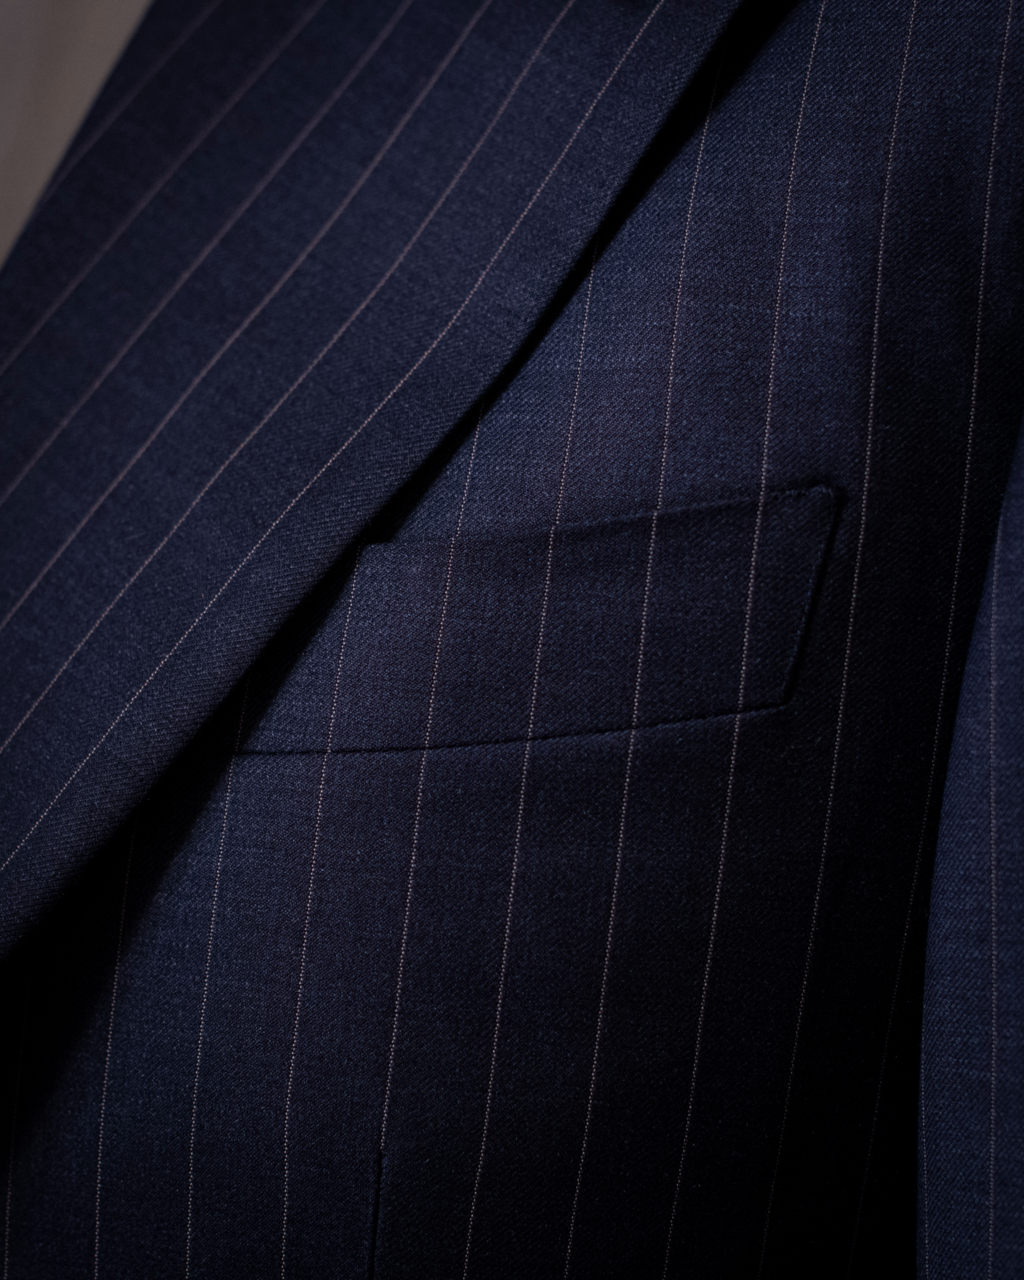 Modernico 3-Piece Blue Pinstripe Suit